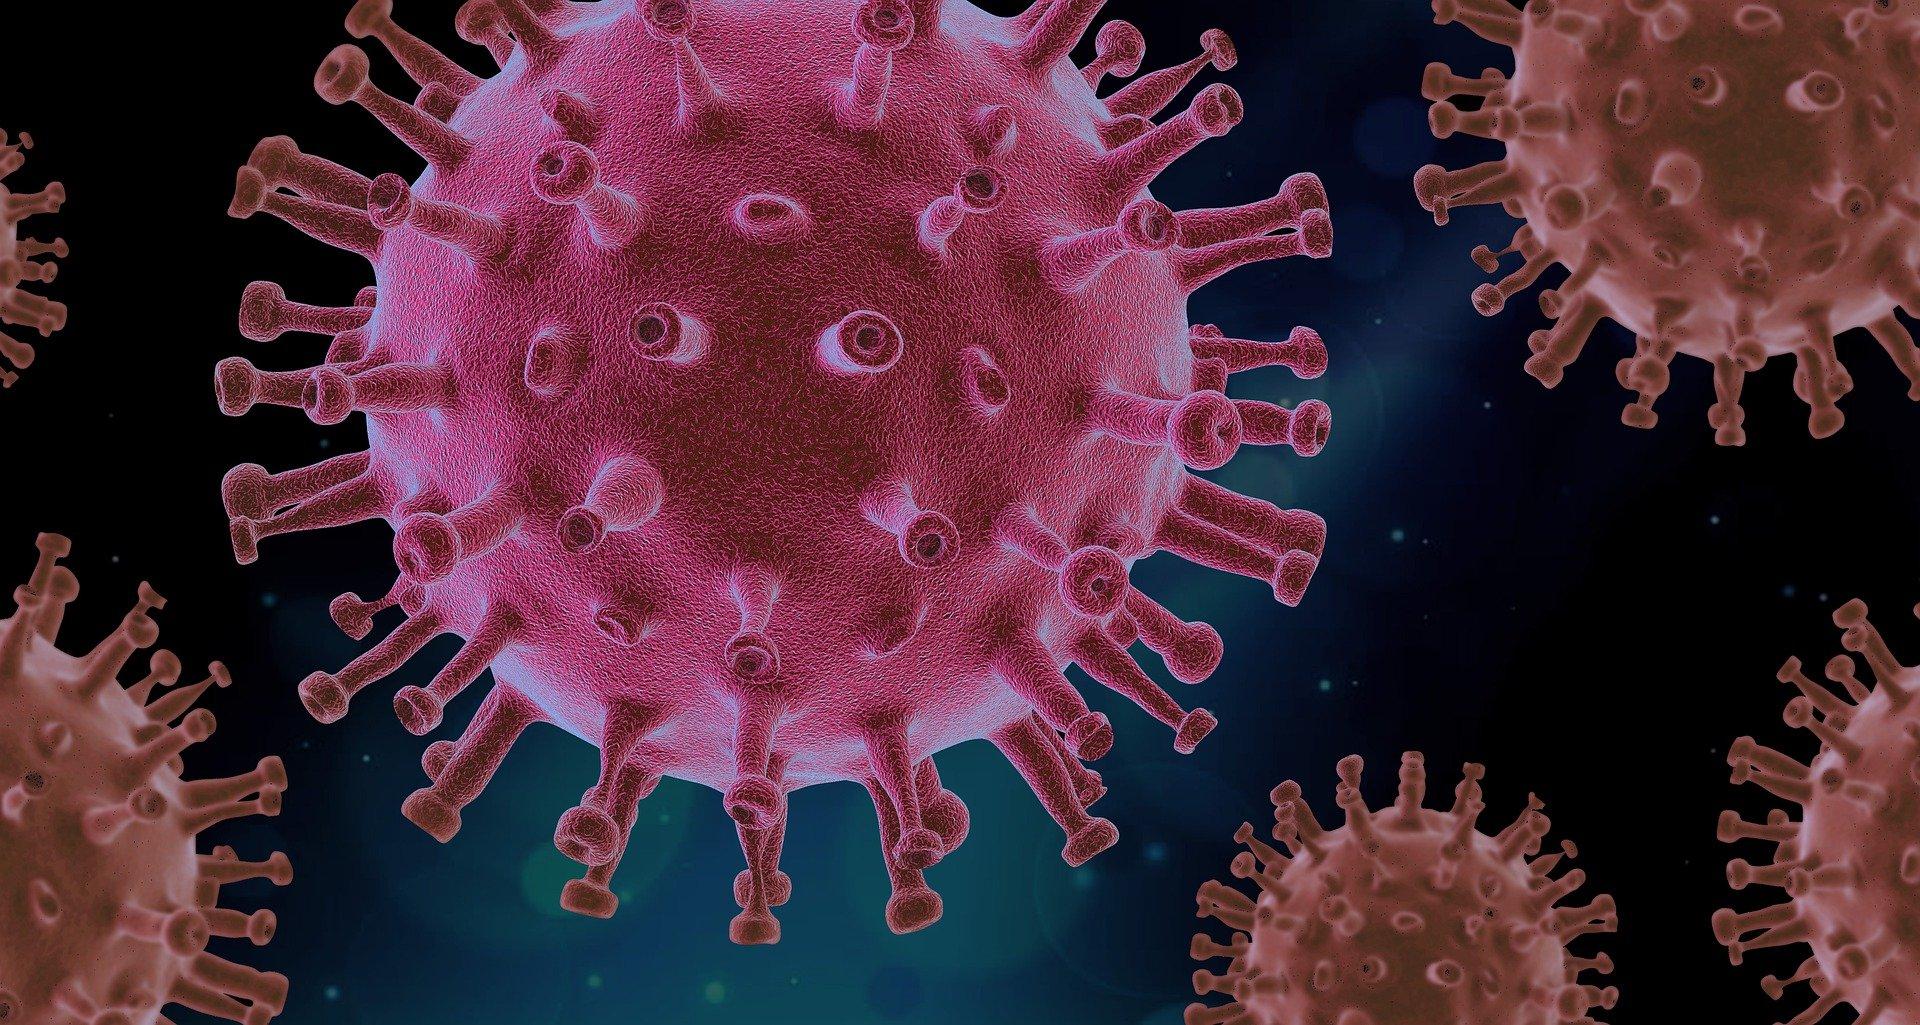 Image of close up of virus